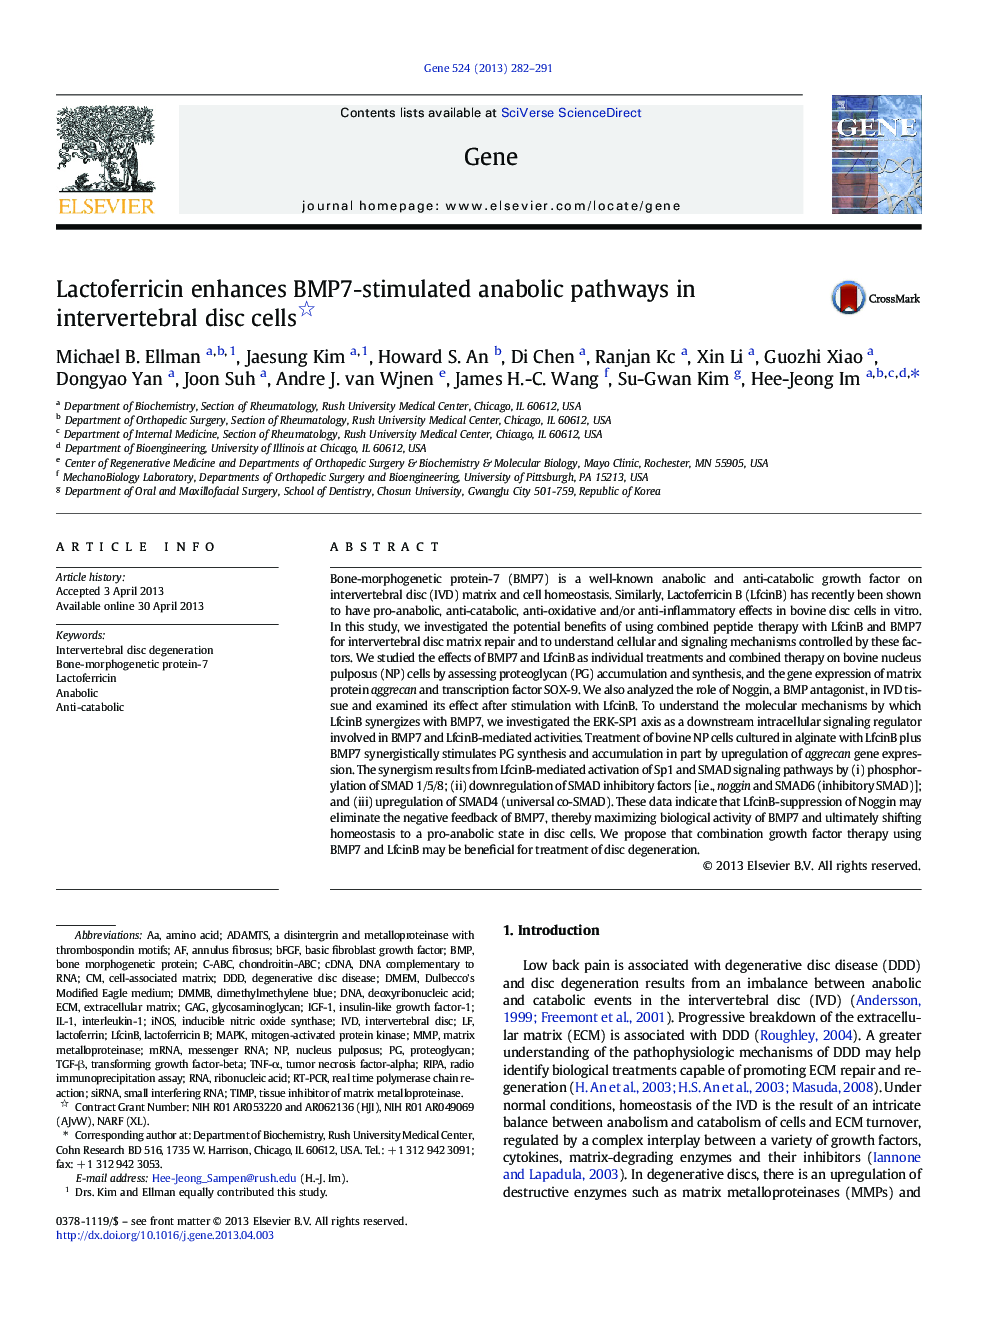 Lactoferricin enhances BMP7-stimulated anabolic pathways in intervertebral disc cells 